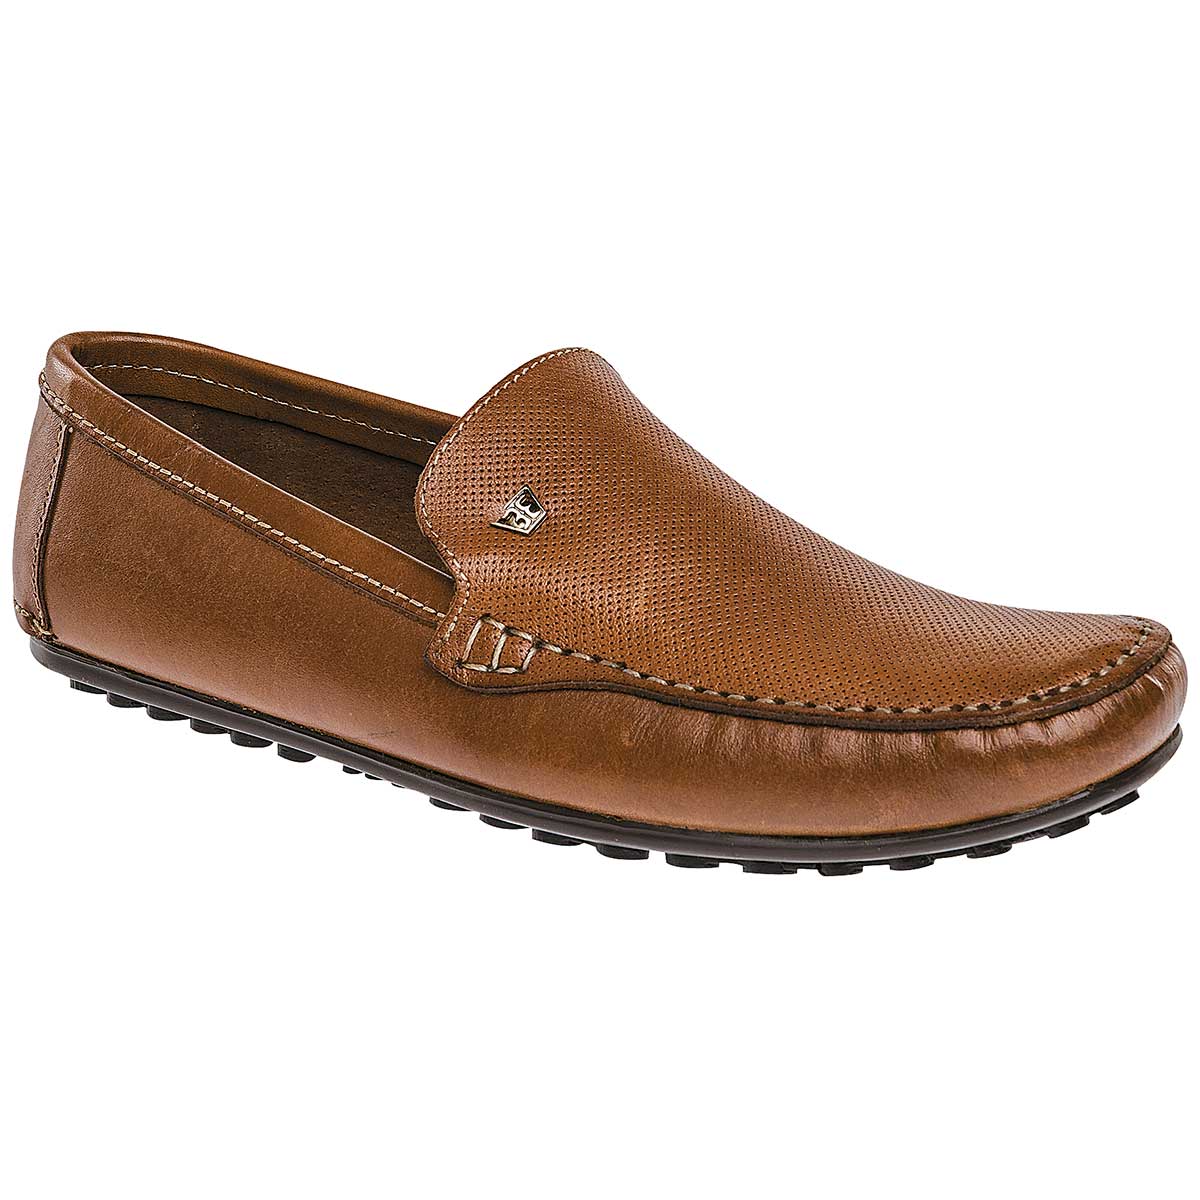 Pakar.com - Mayo: Regalos para mamá | Zapato casual para hombre cod-55986